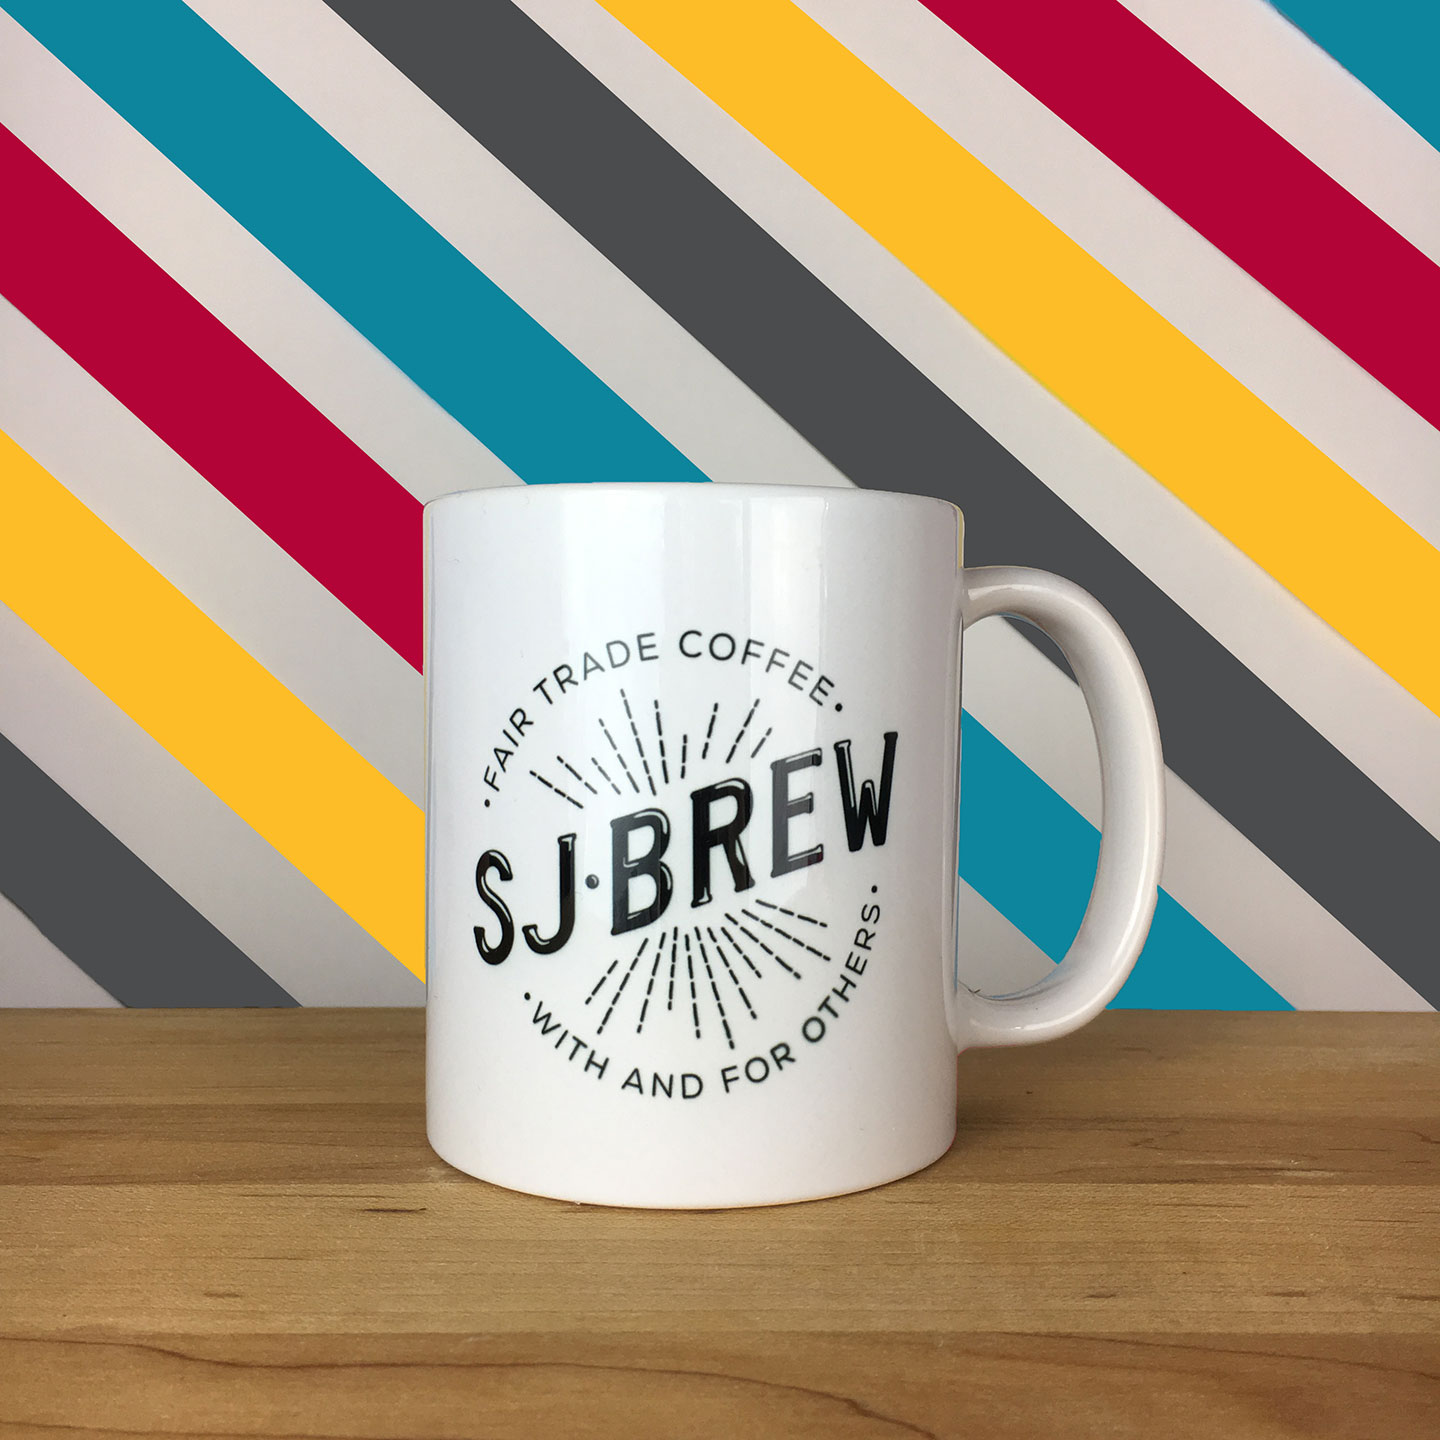 SJ Brew mug with colored stripes background